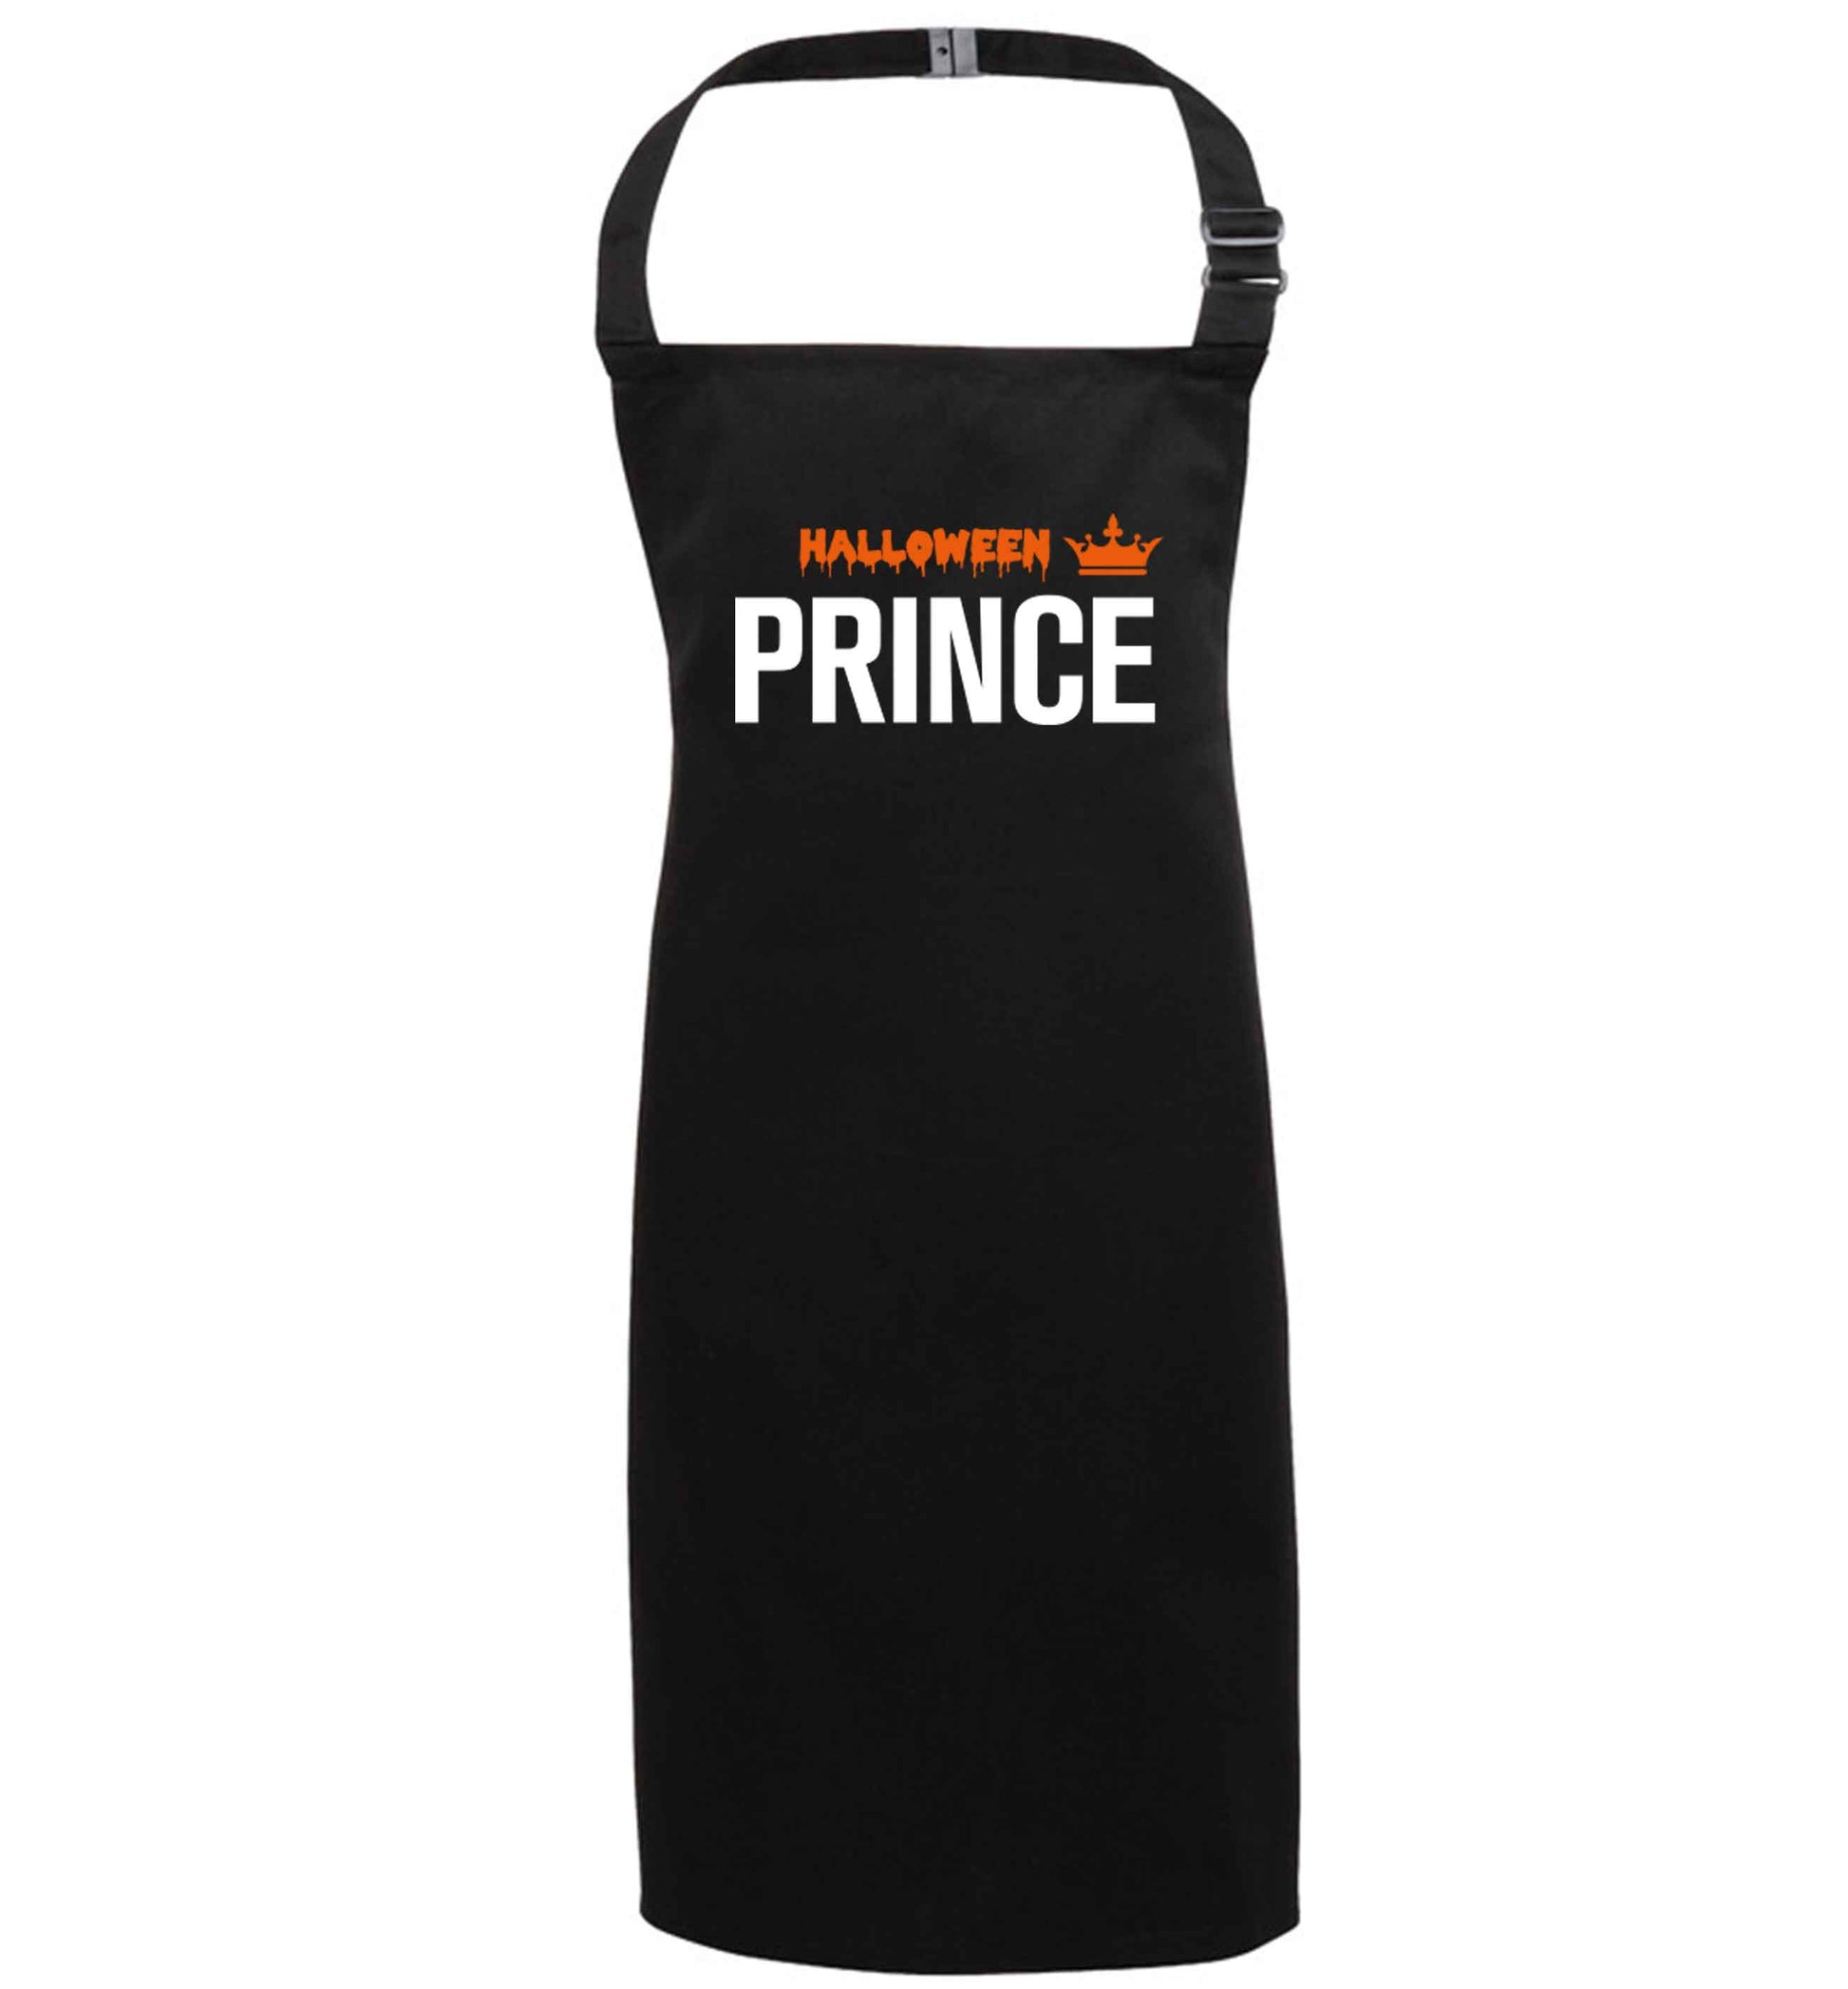 Halloween prince black apron 7-10 years